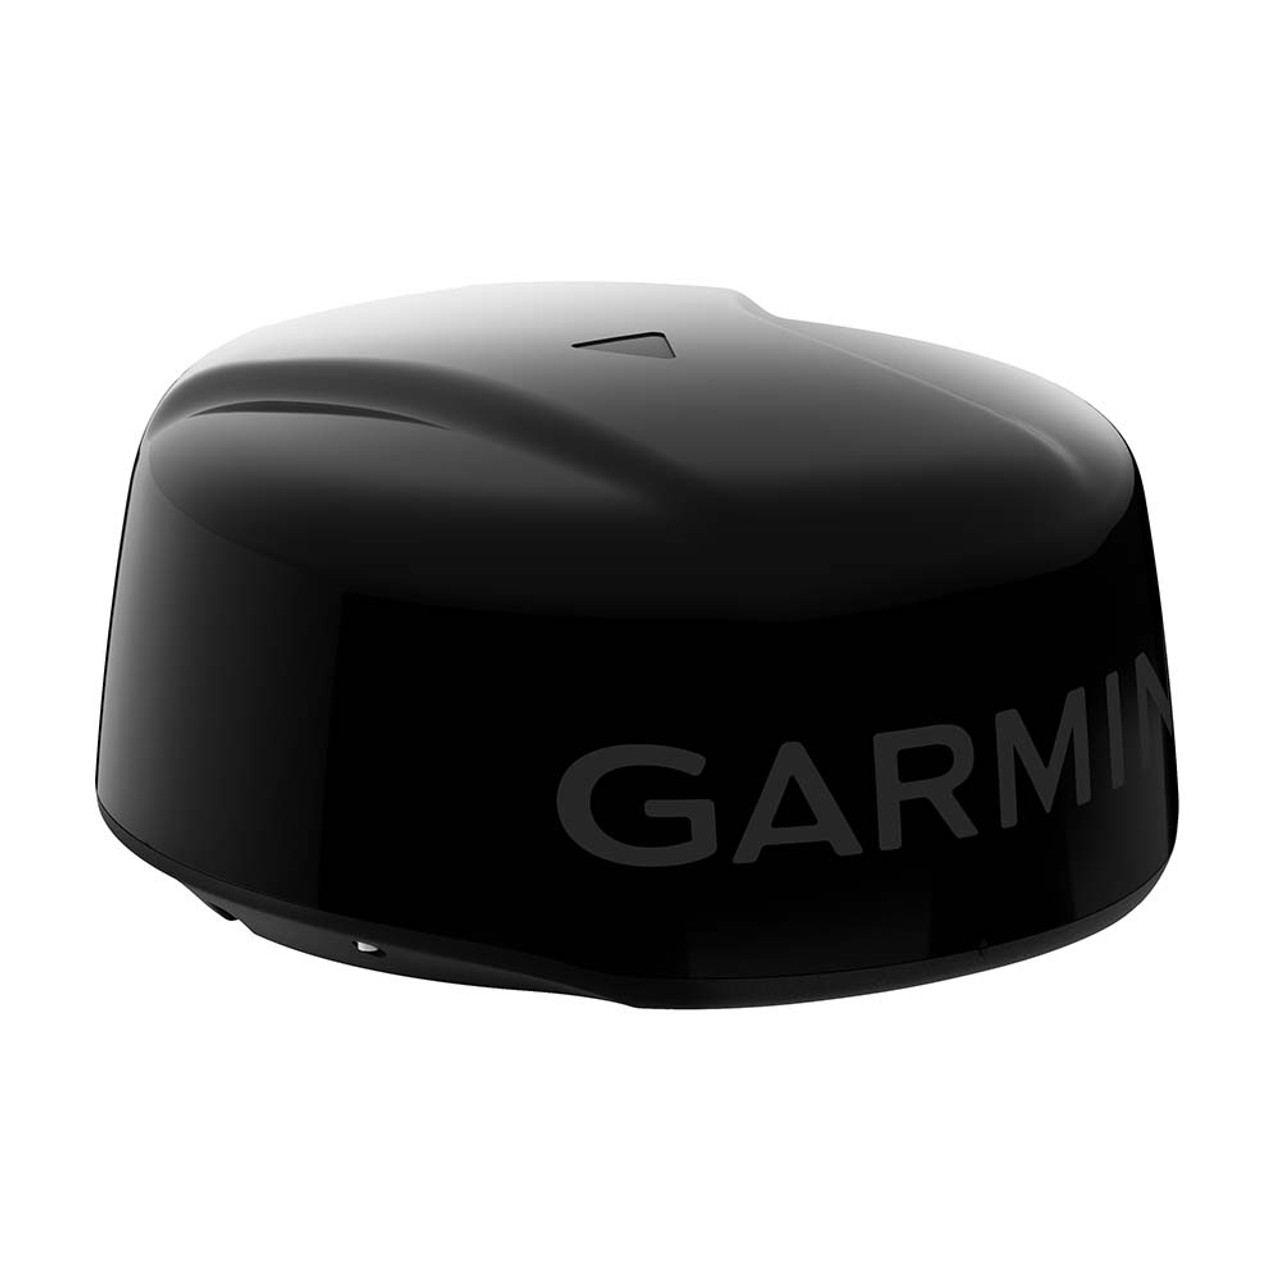 Garmin - GMR Fantom 18x Dome Radar - Black